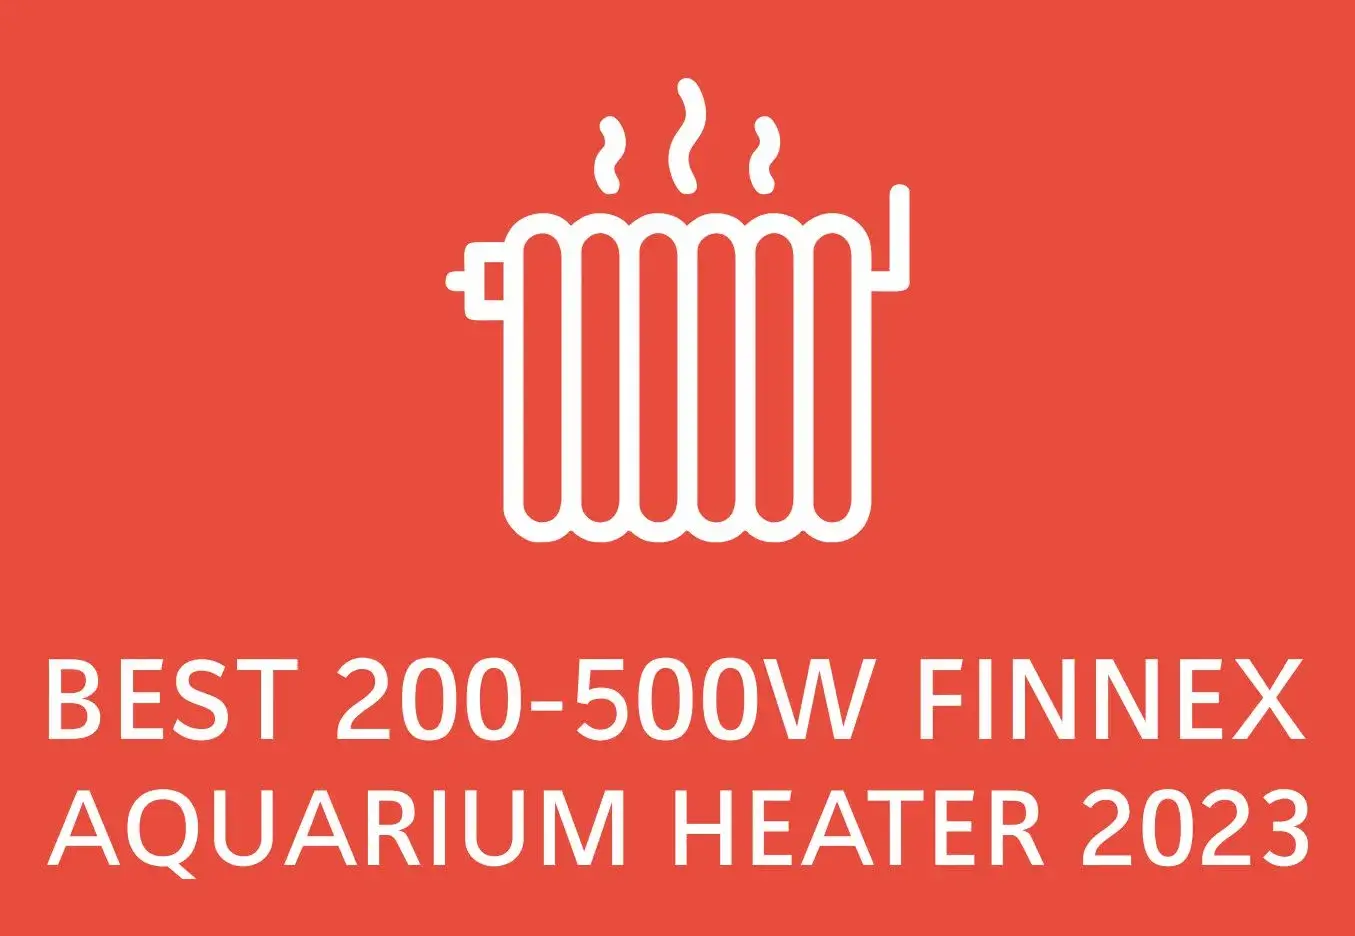 Best 200-500 Watt Finnex aquarium heaters